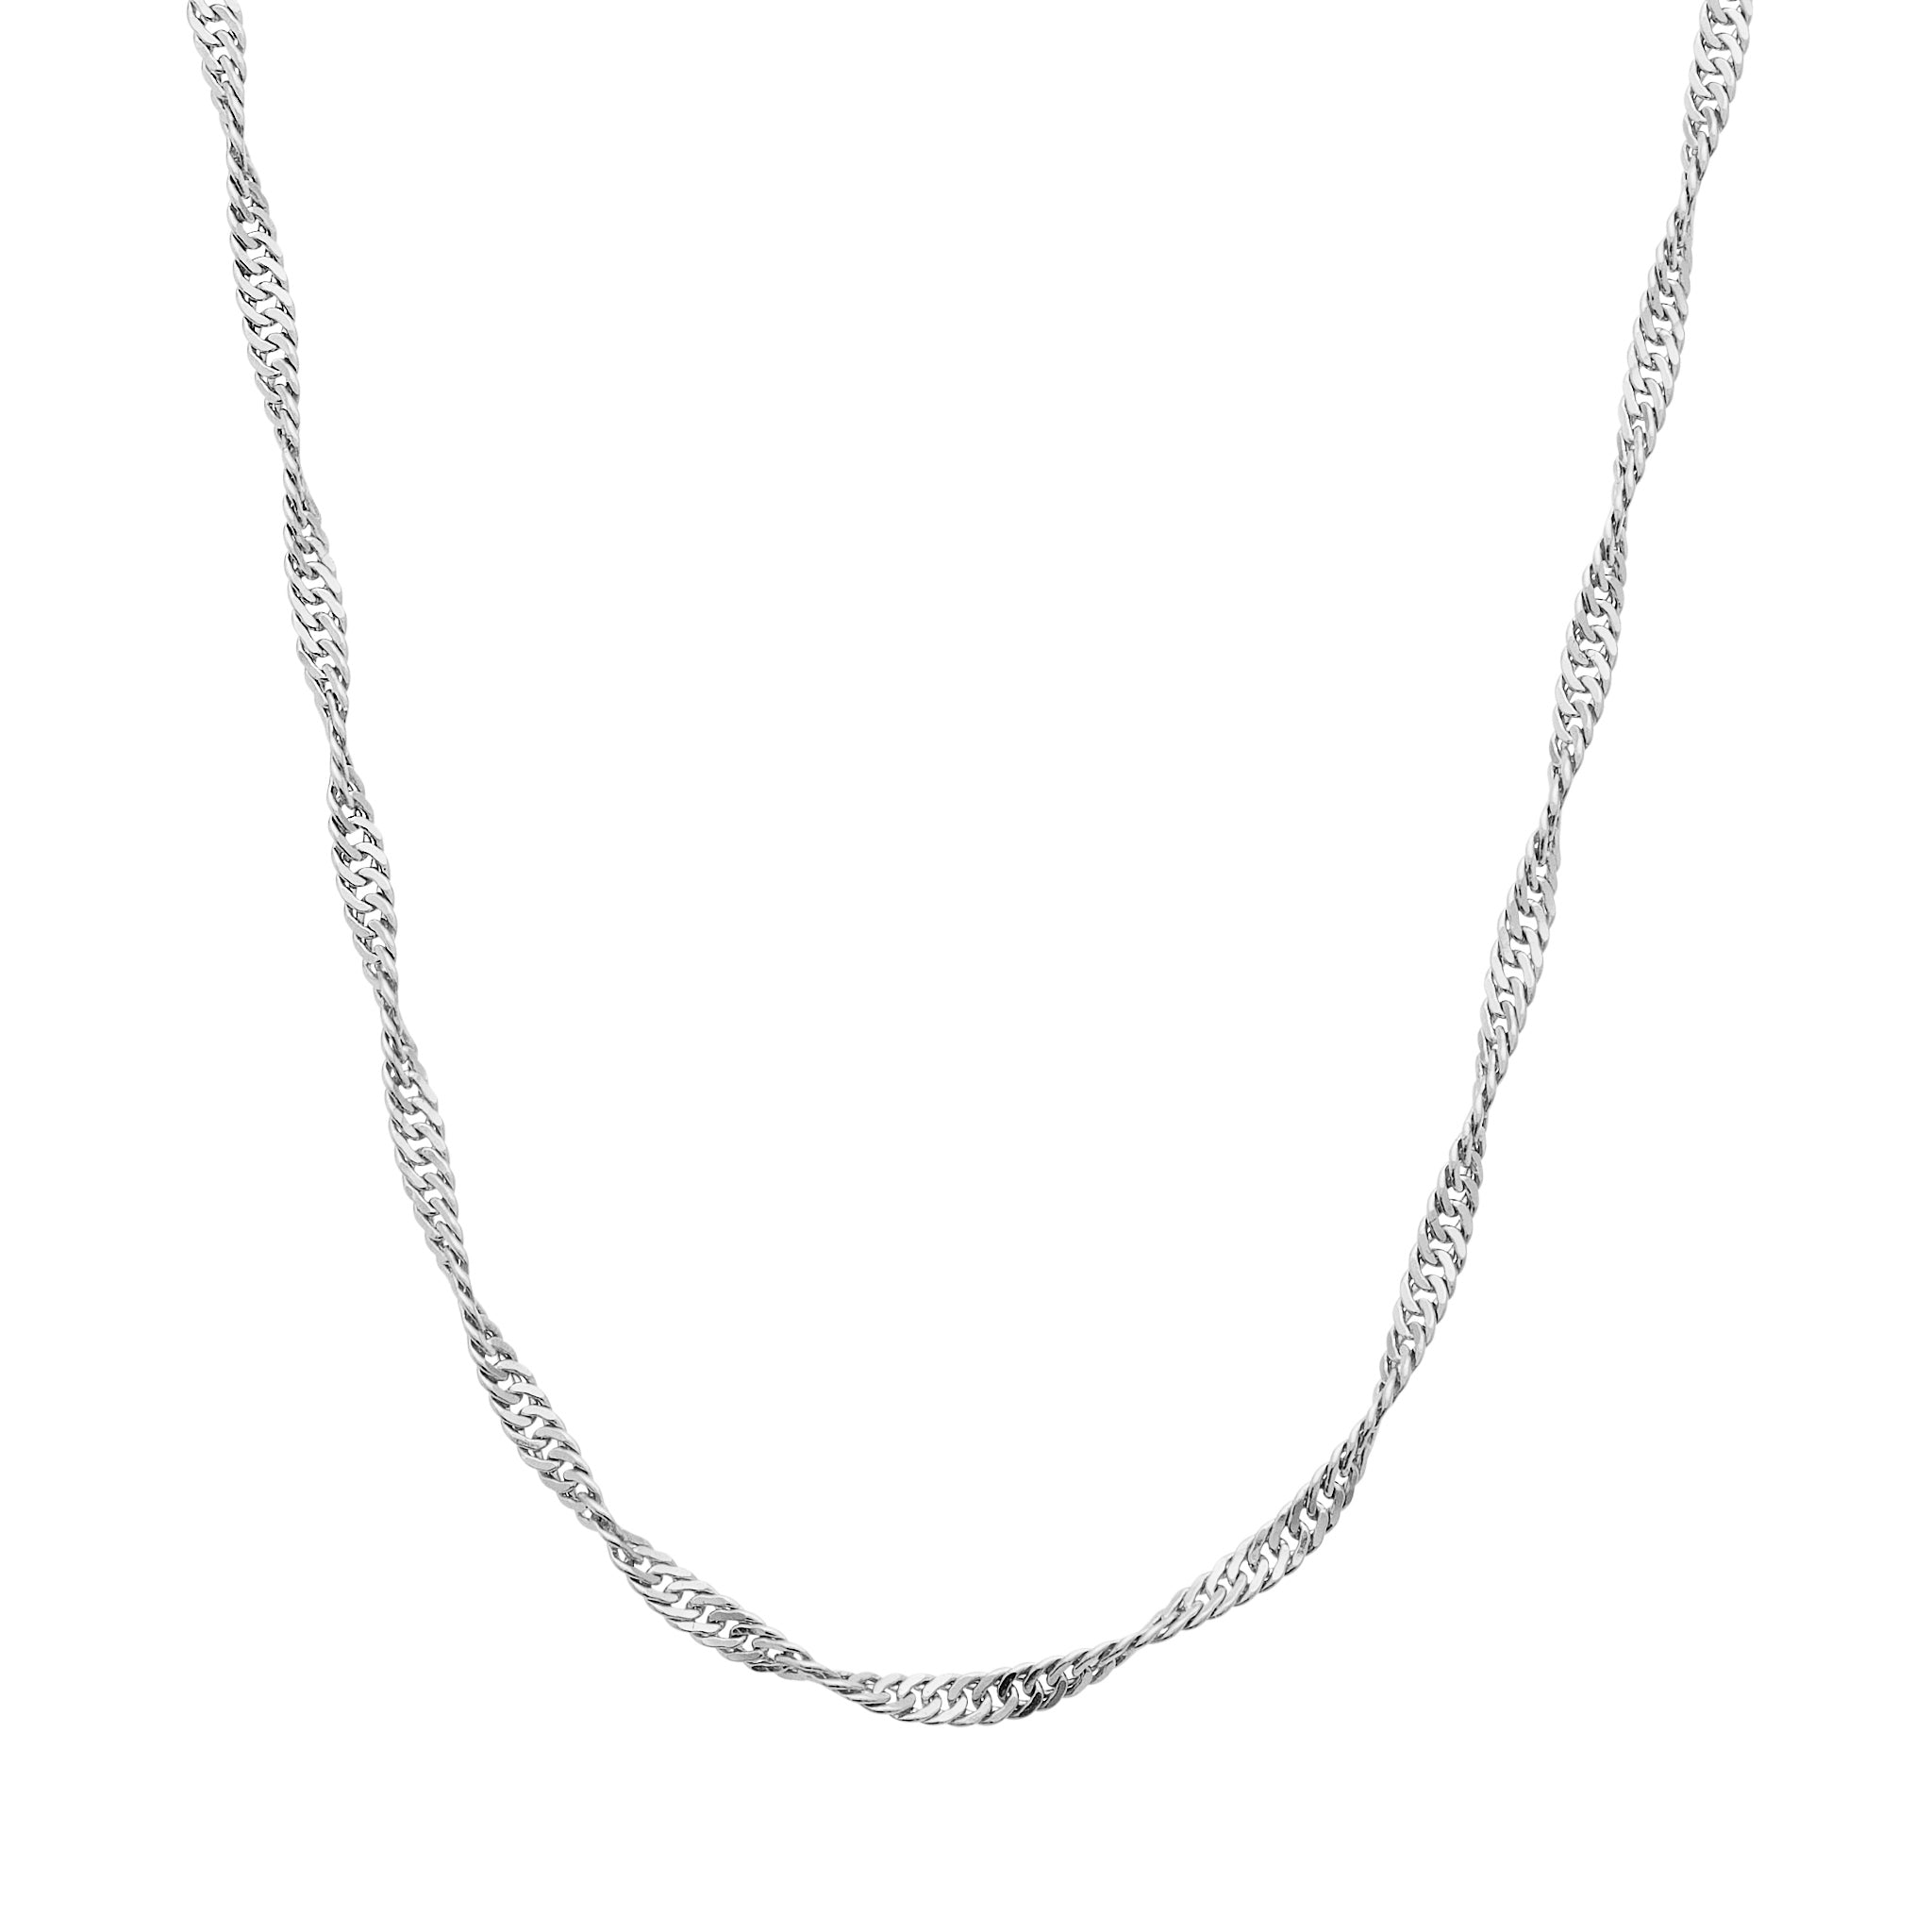 Singapore Twist Chain Necklace Silver